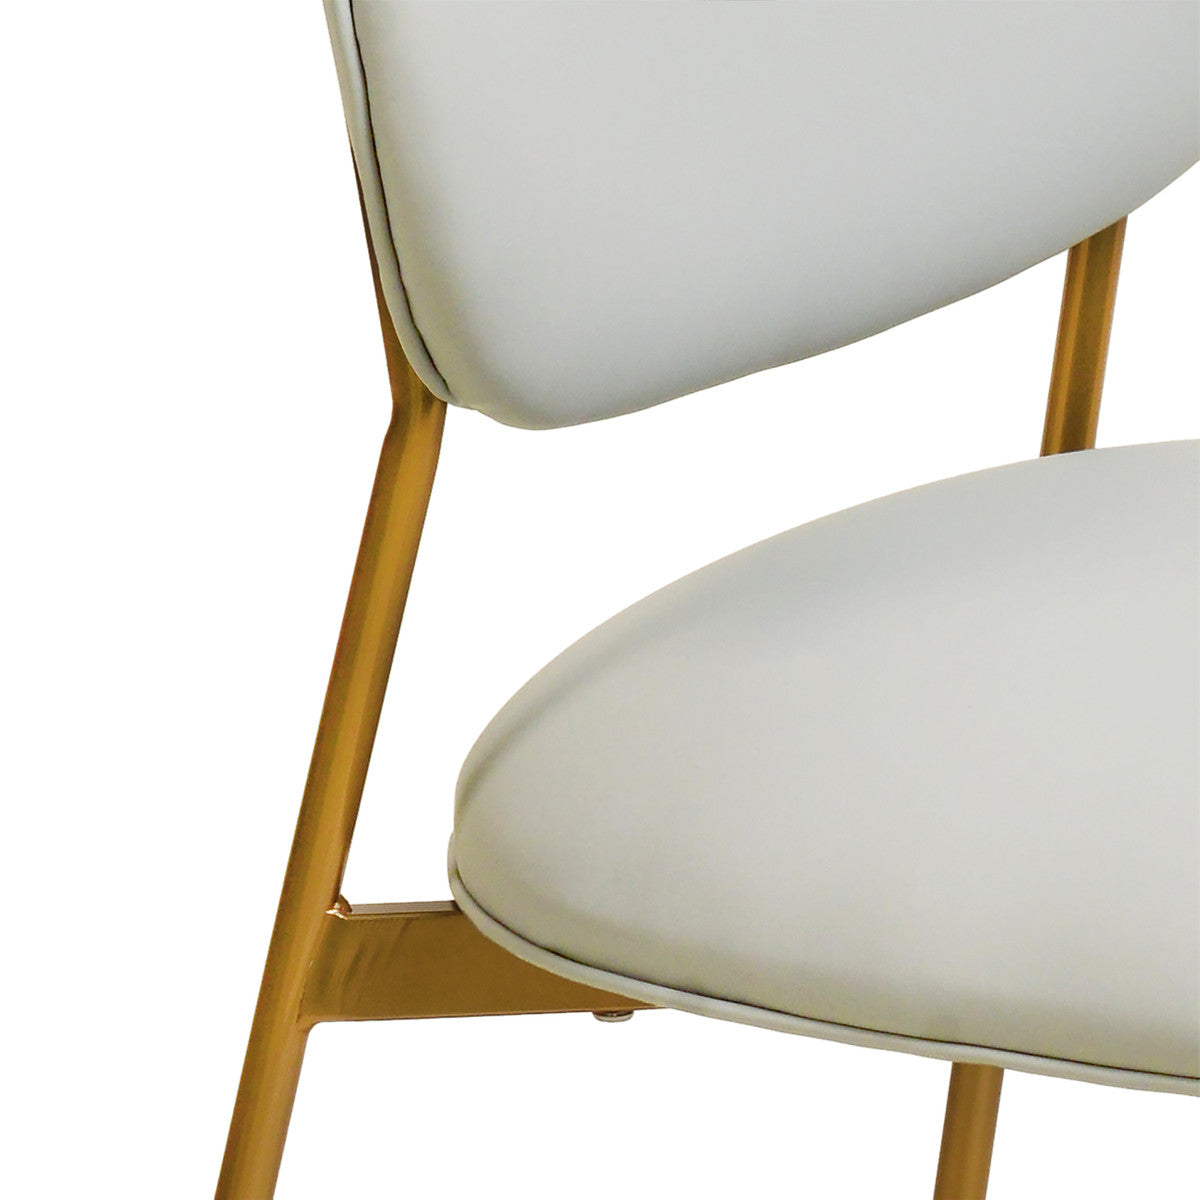 McKenzie Light Grey Vegan Leather Stackable Dining Chair - Set of 2 | BeBoldFurniture